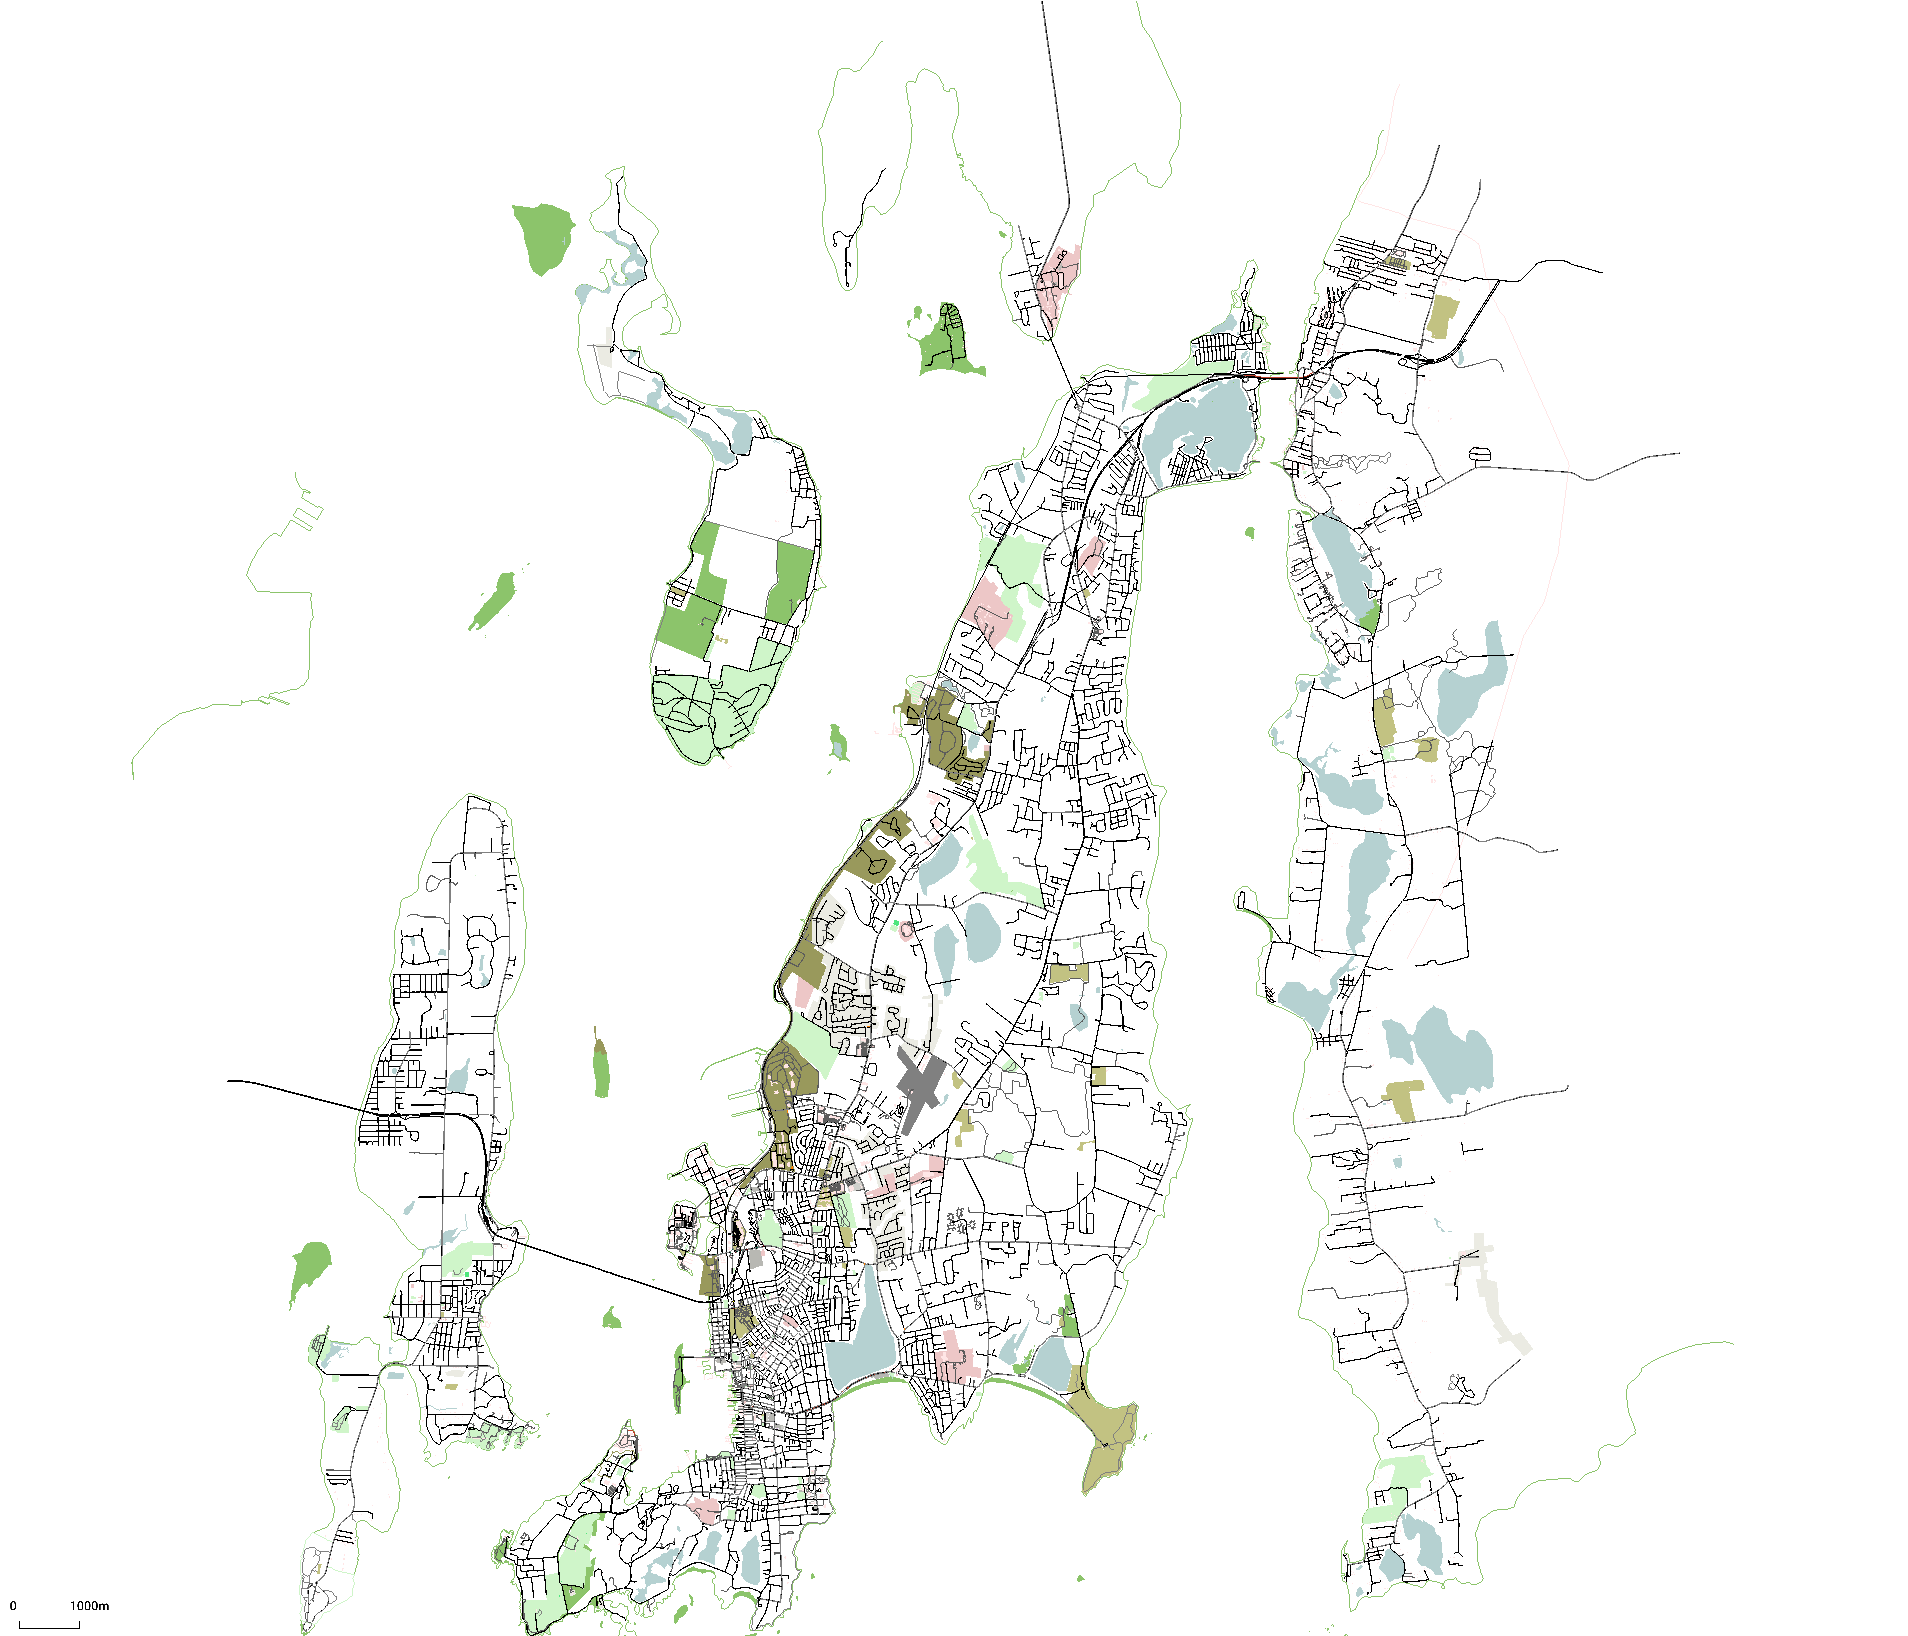 The full Aquidneck Island Transport Model network